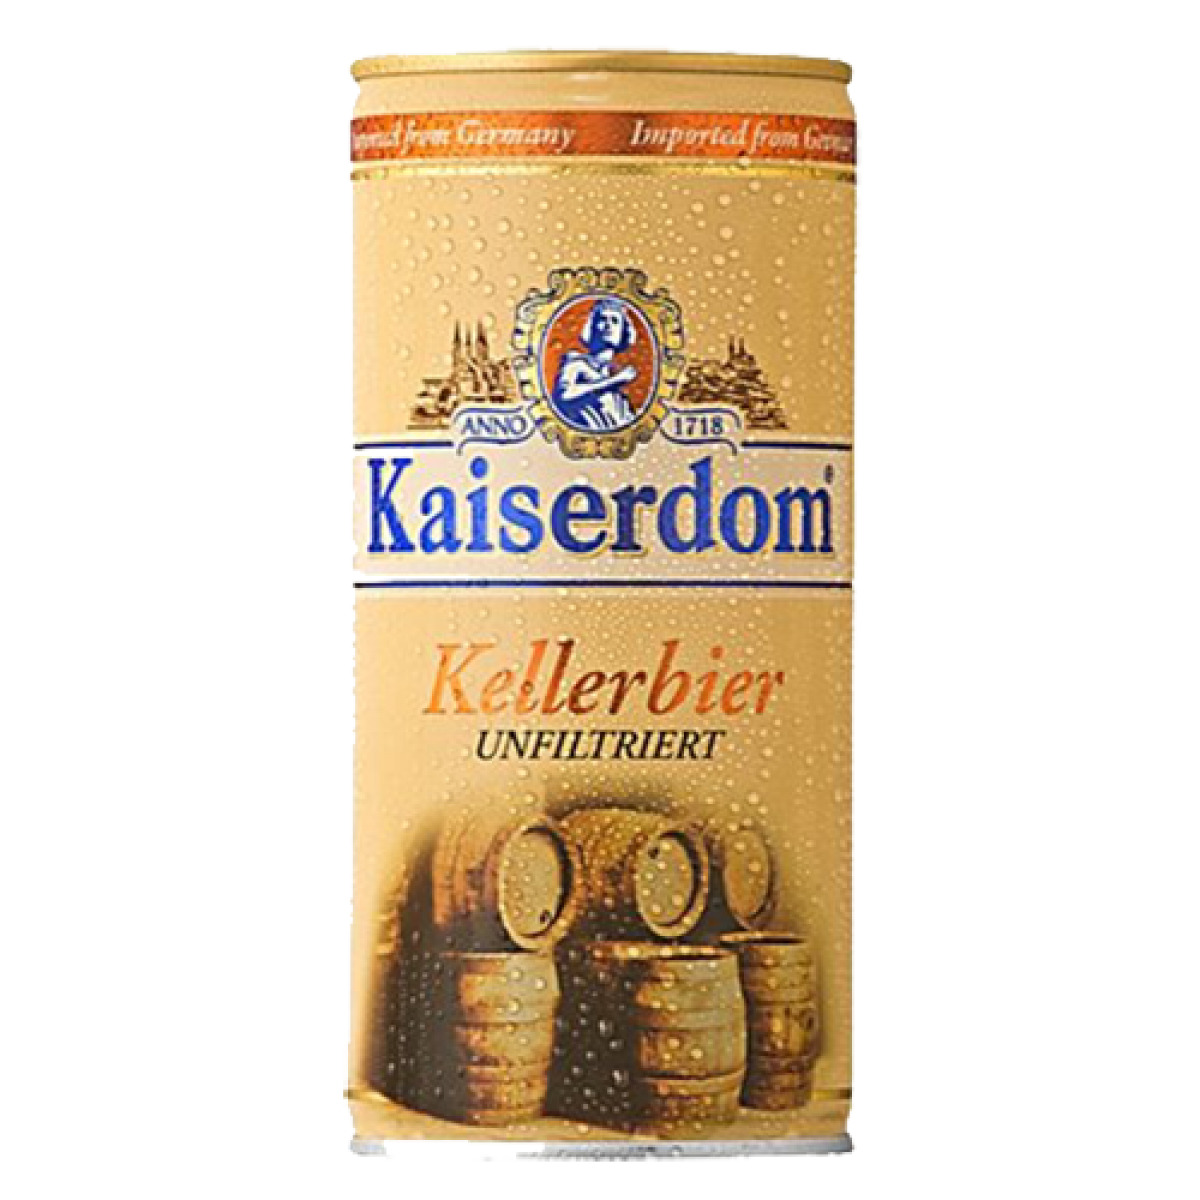 Bia Kaiserdom Kellerbier 4.7% Thùng 12 lon 1000ml